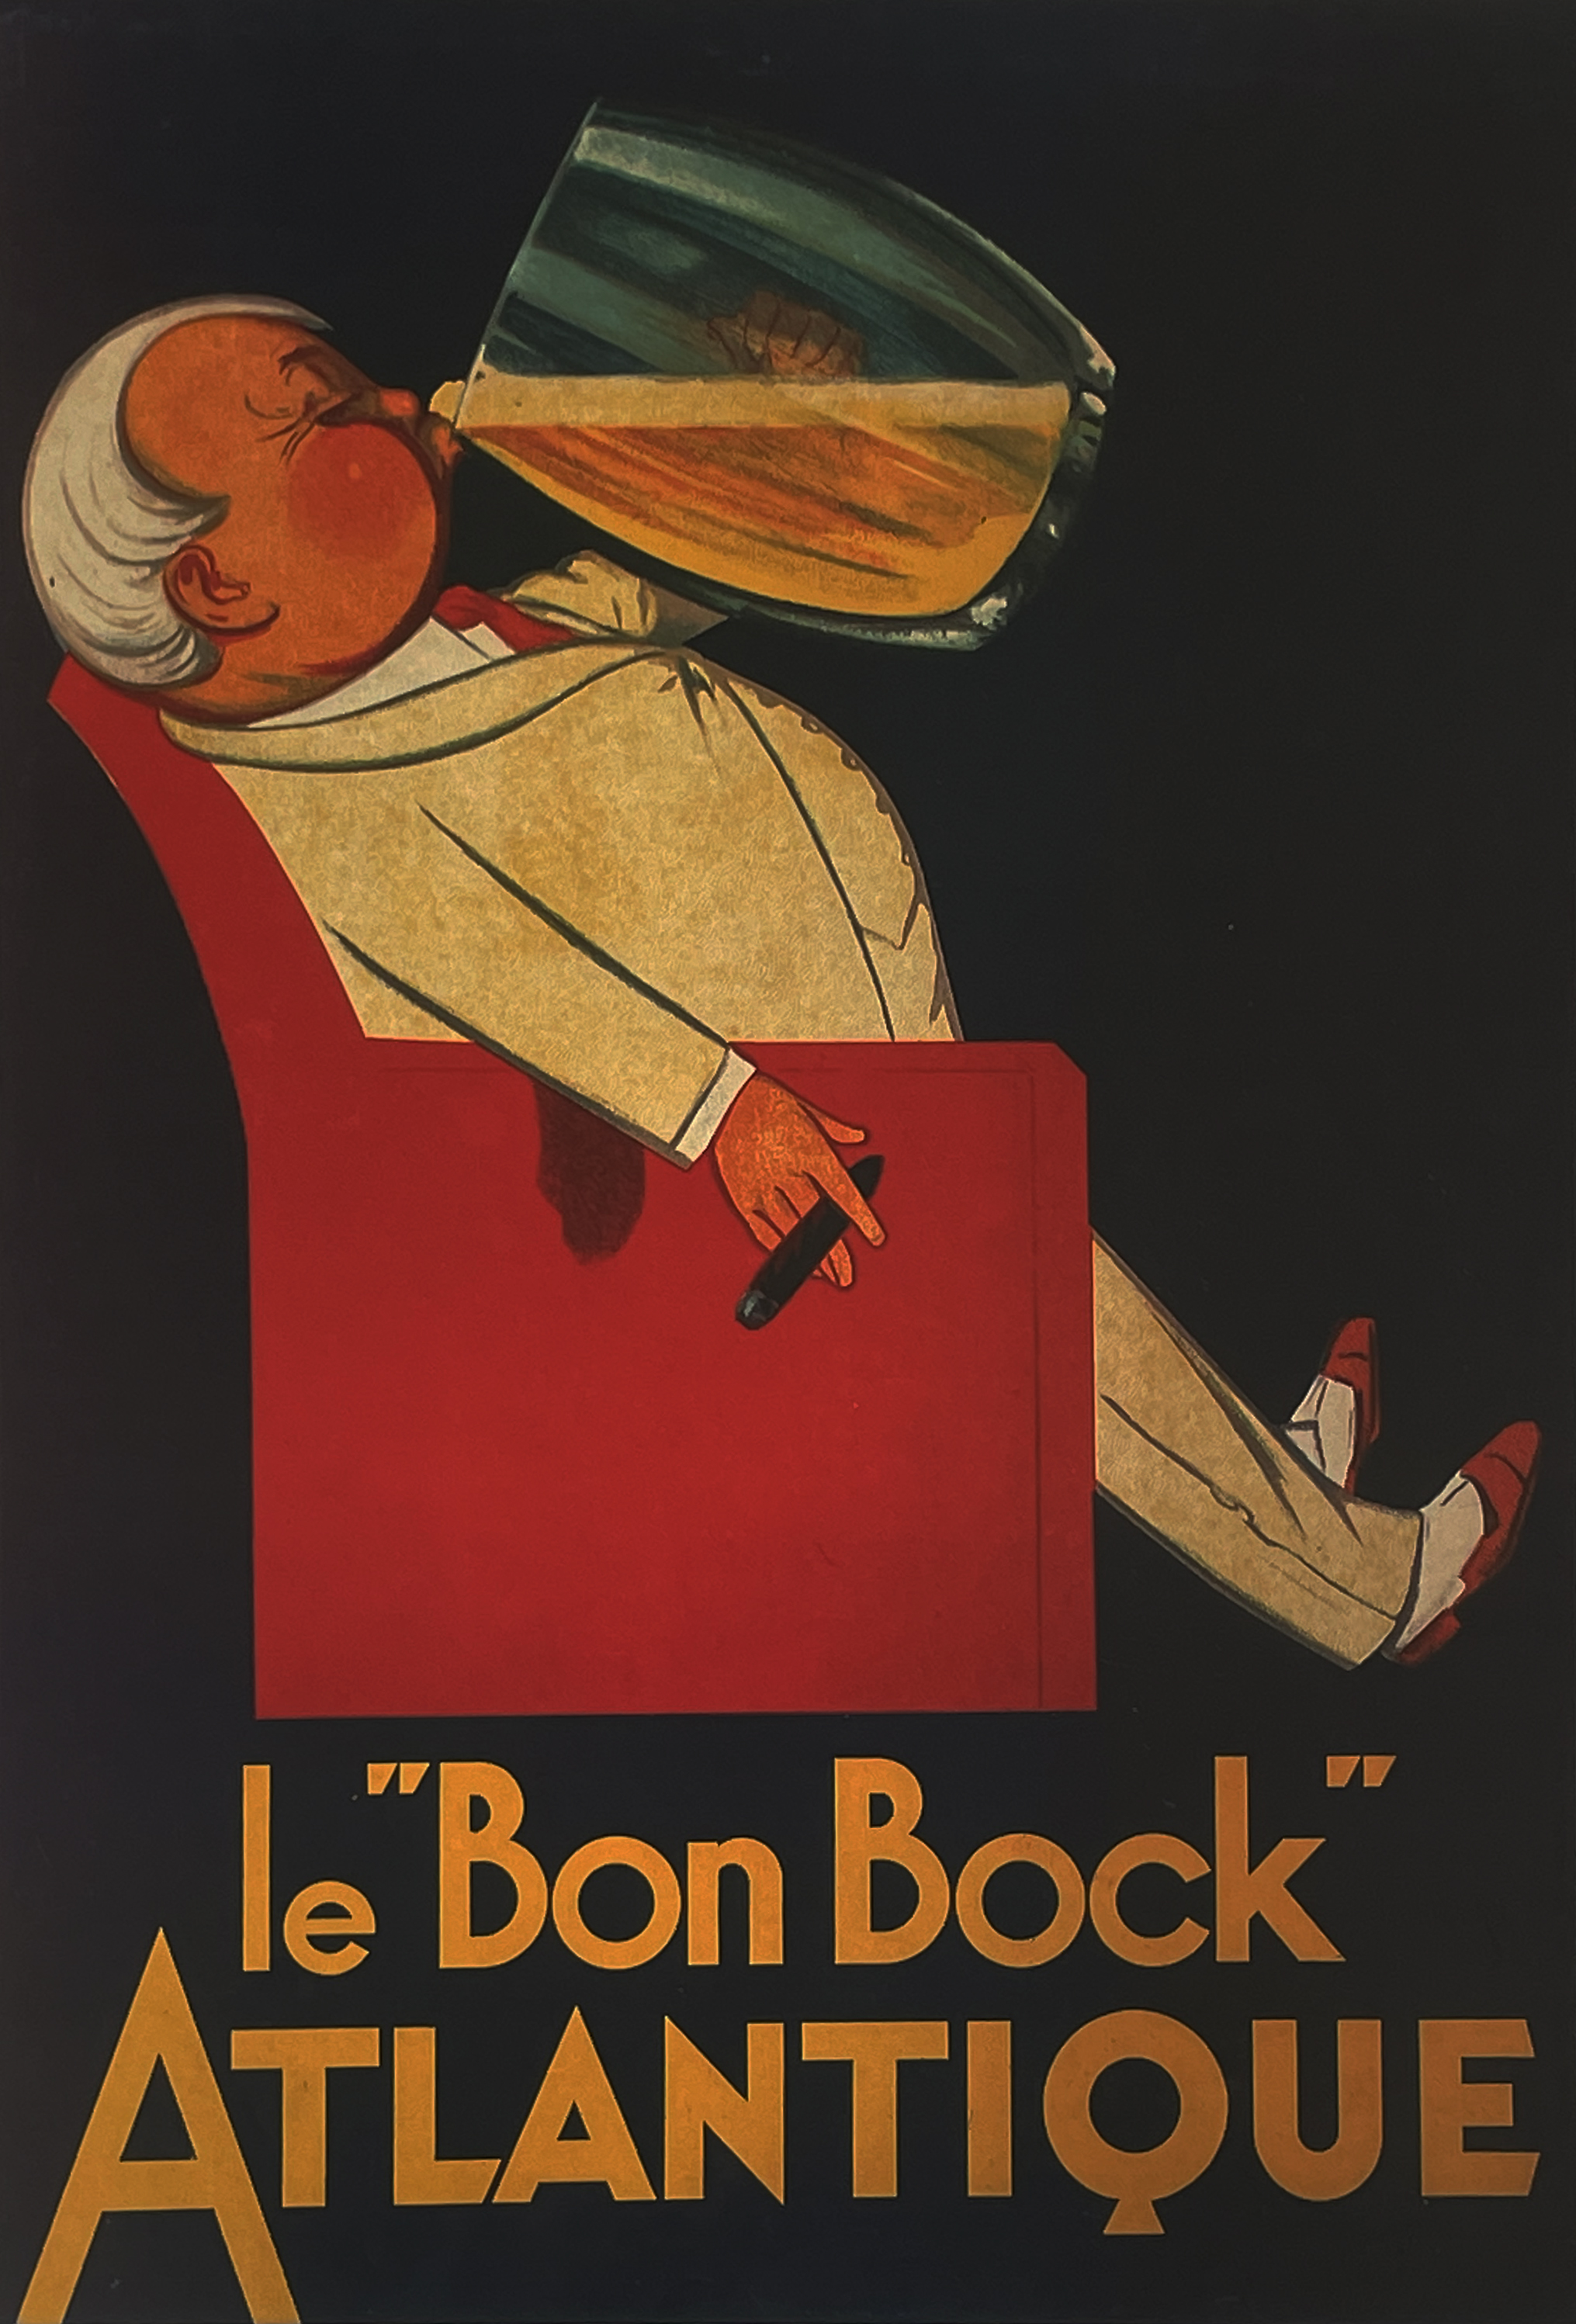 Le "Bon Bock" Atlantique